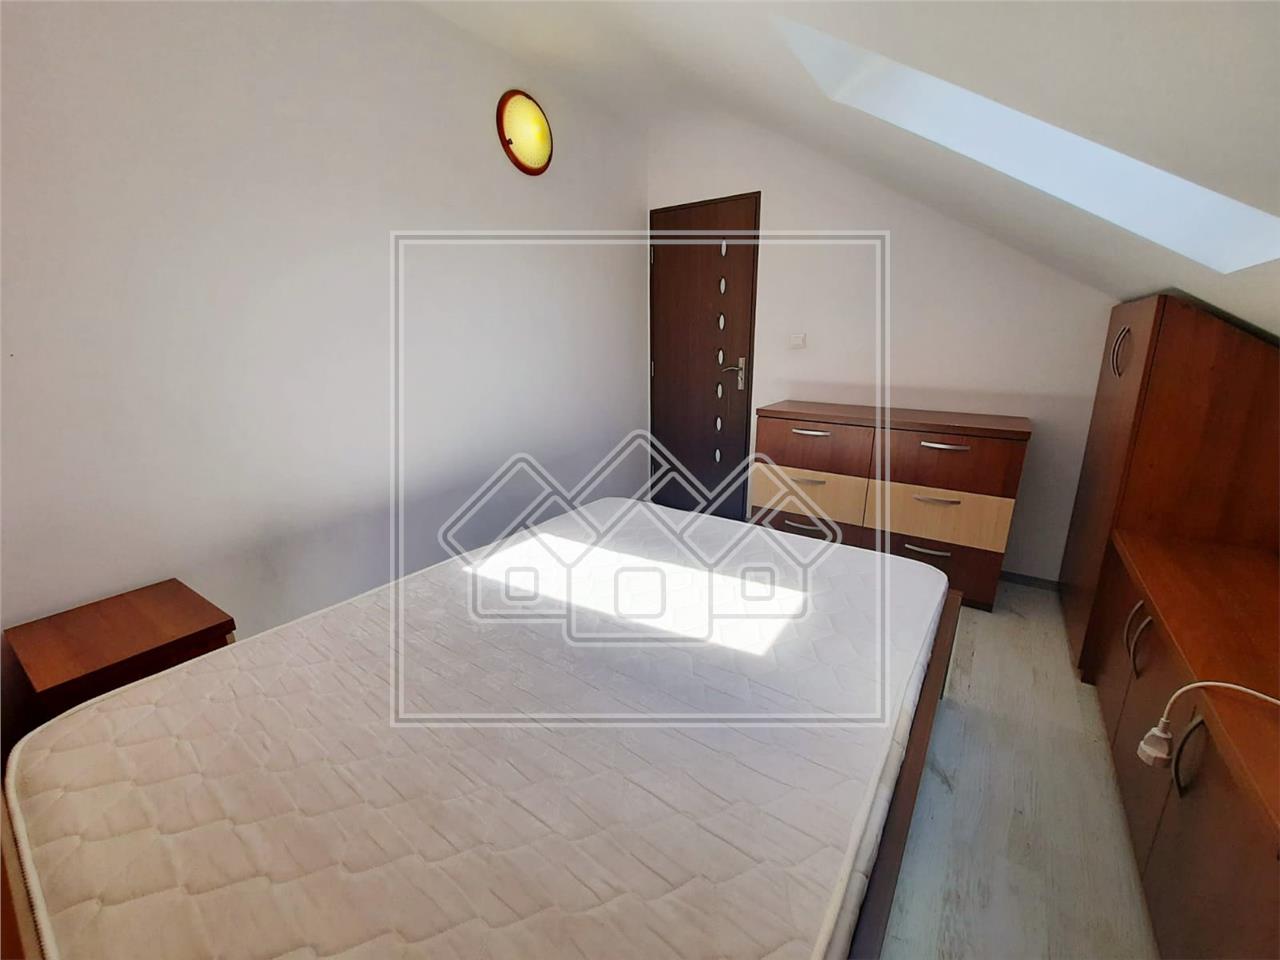 Attic for sale in Sibiu - 3 rooms - 2 bathrooms - Strand II area